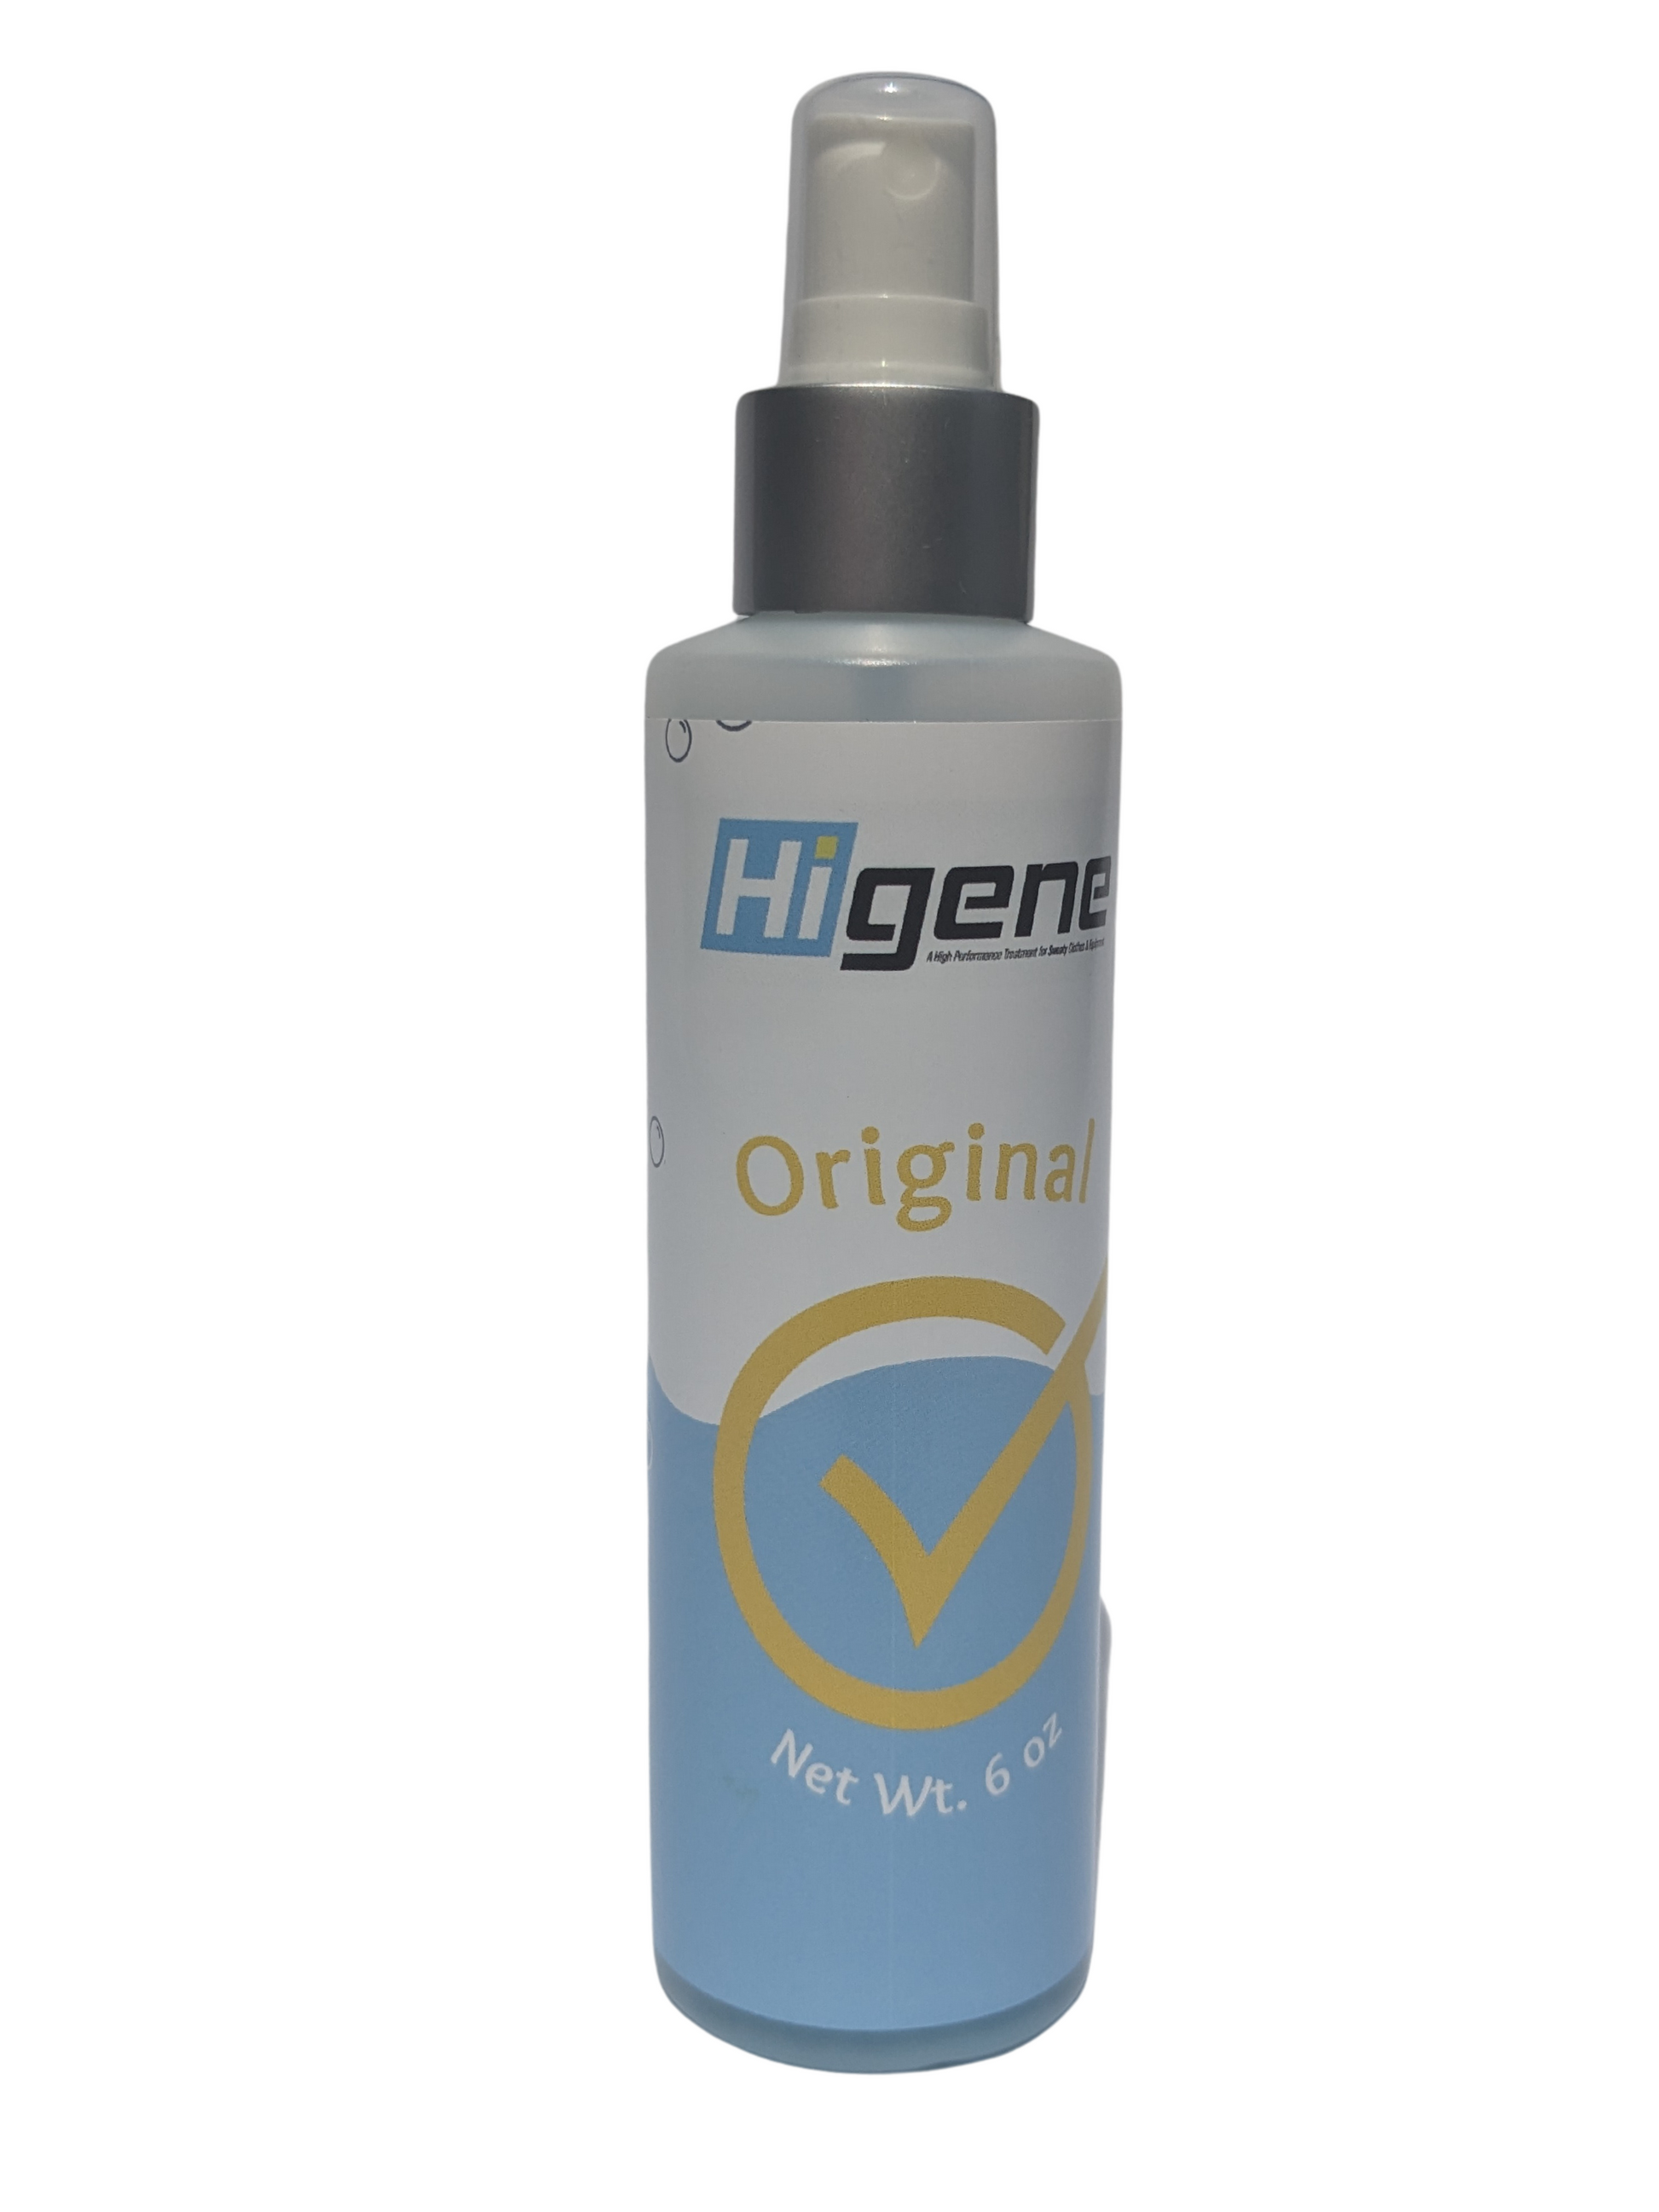 Higene - Original Scent laundry spray